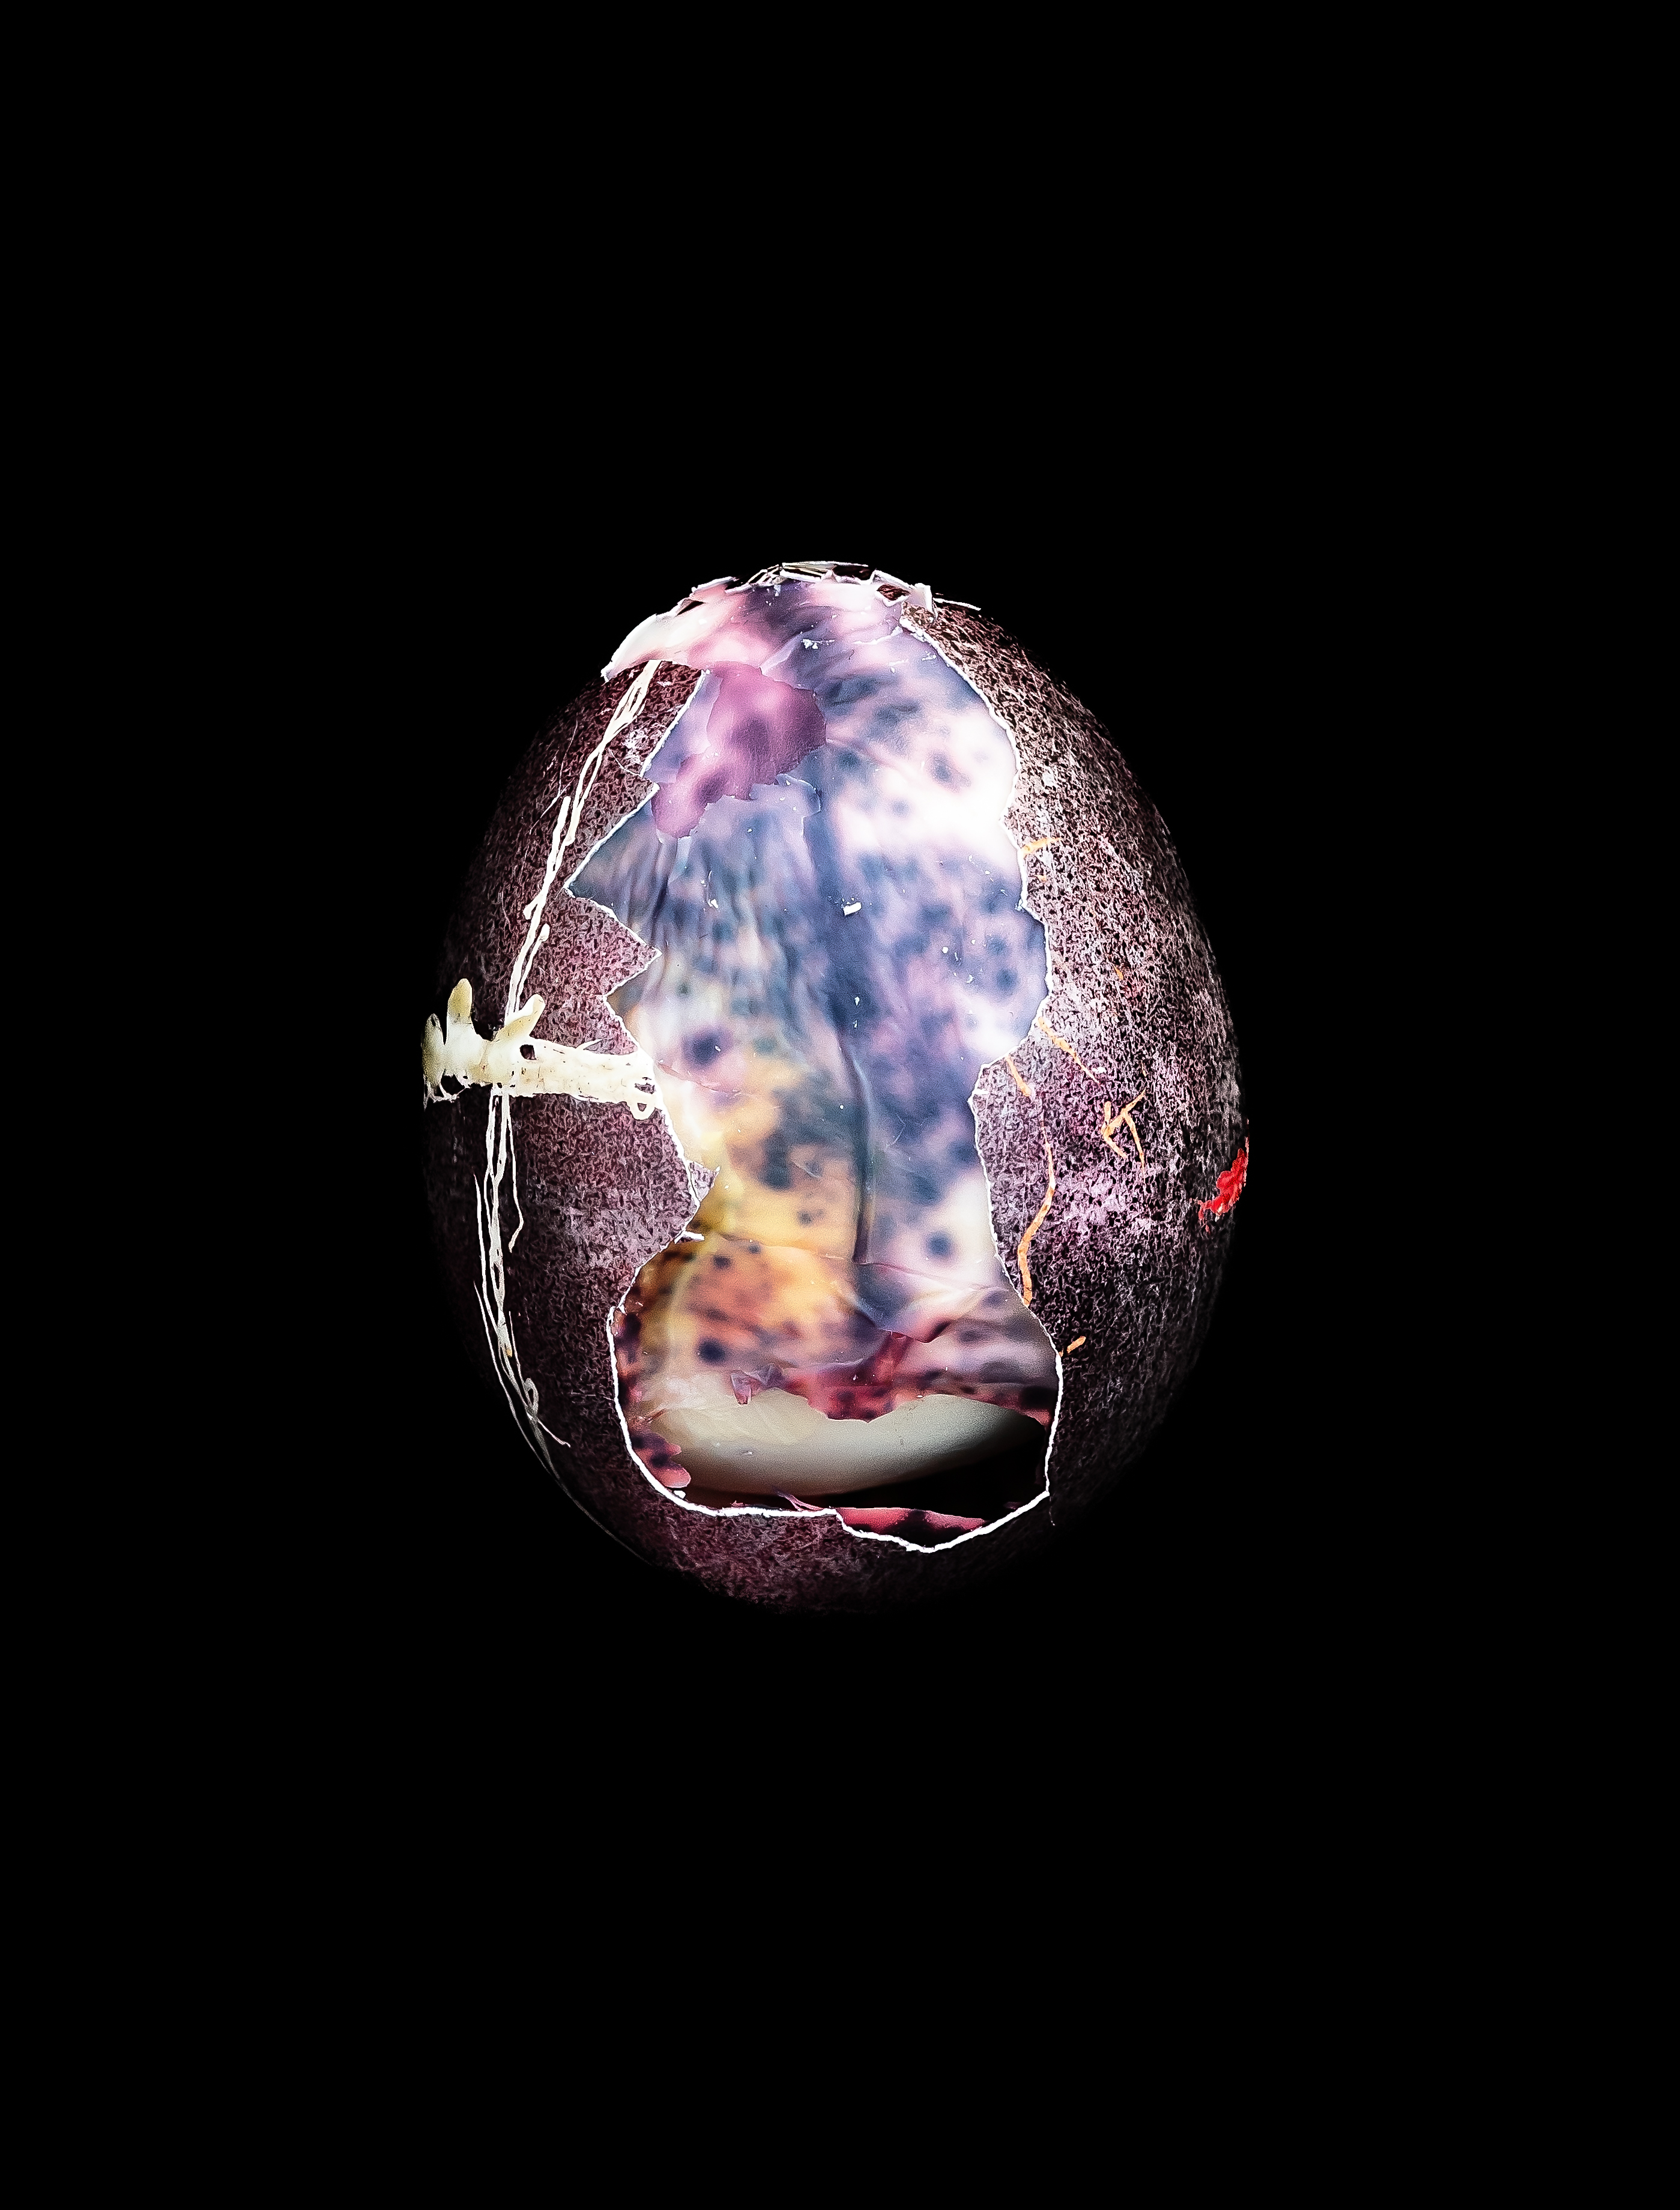 Tree Egg, ©2019 Alison Taggart-Barone